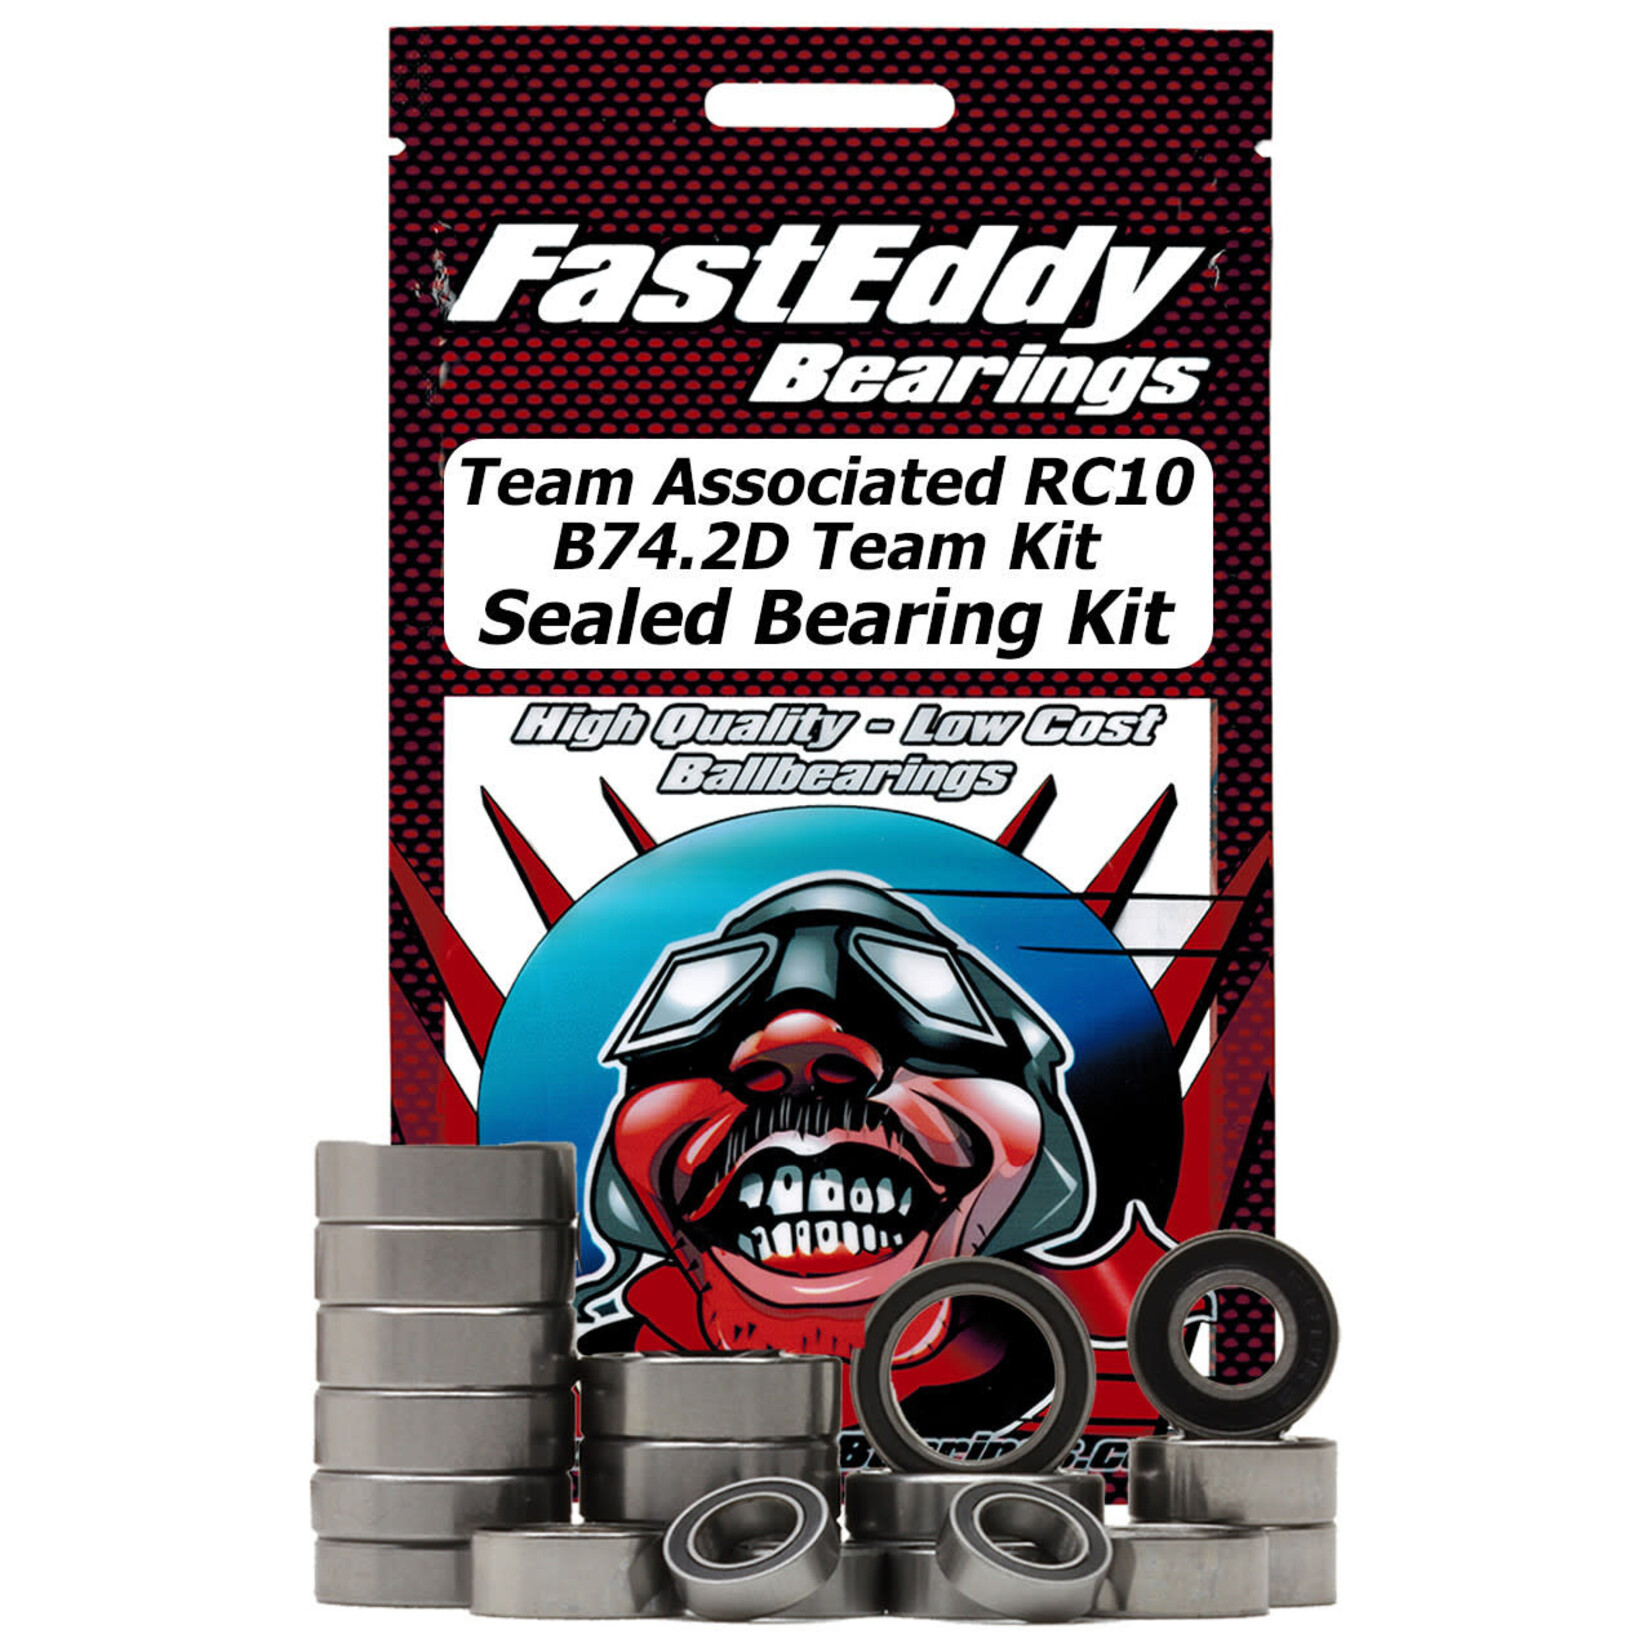 FastEddy FastEddy Bearings Team Associated RC10 B74.2D Team Kit Sealed Bearing Kit #TFE7998